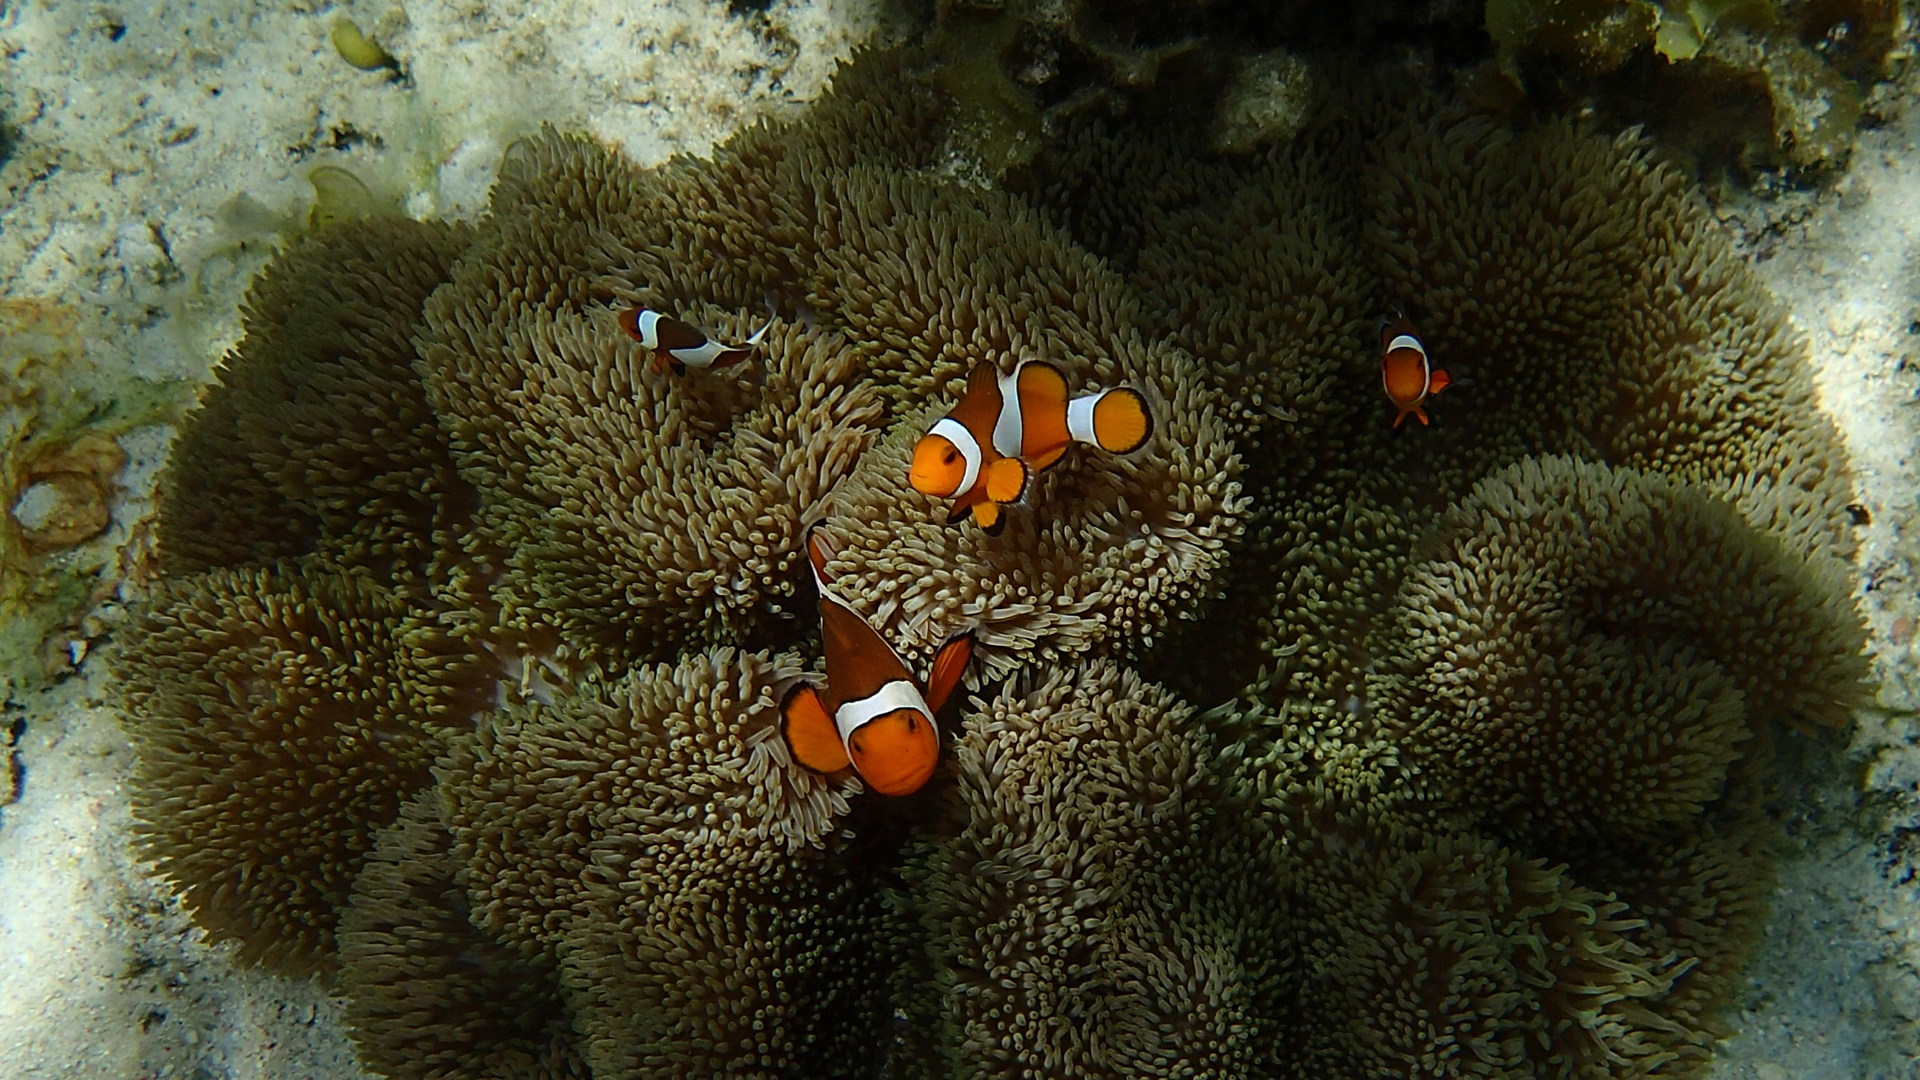 Amphiprion ocellaris (ocellaris clownfish) with Stichodactyla gigantea (giant carpet anemone)